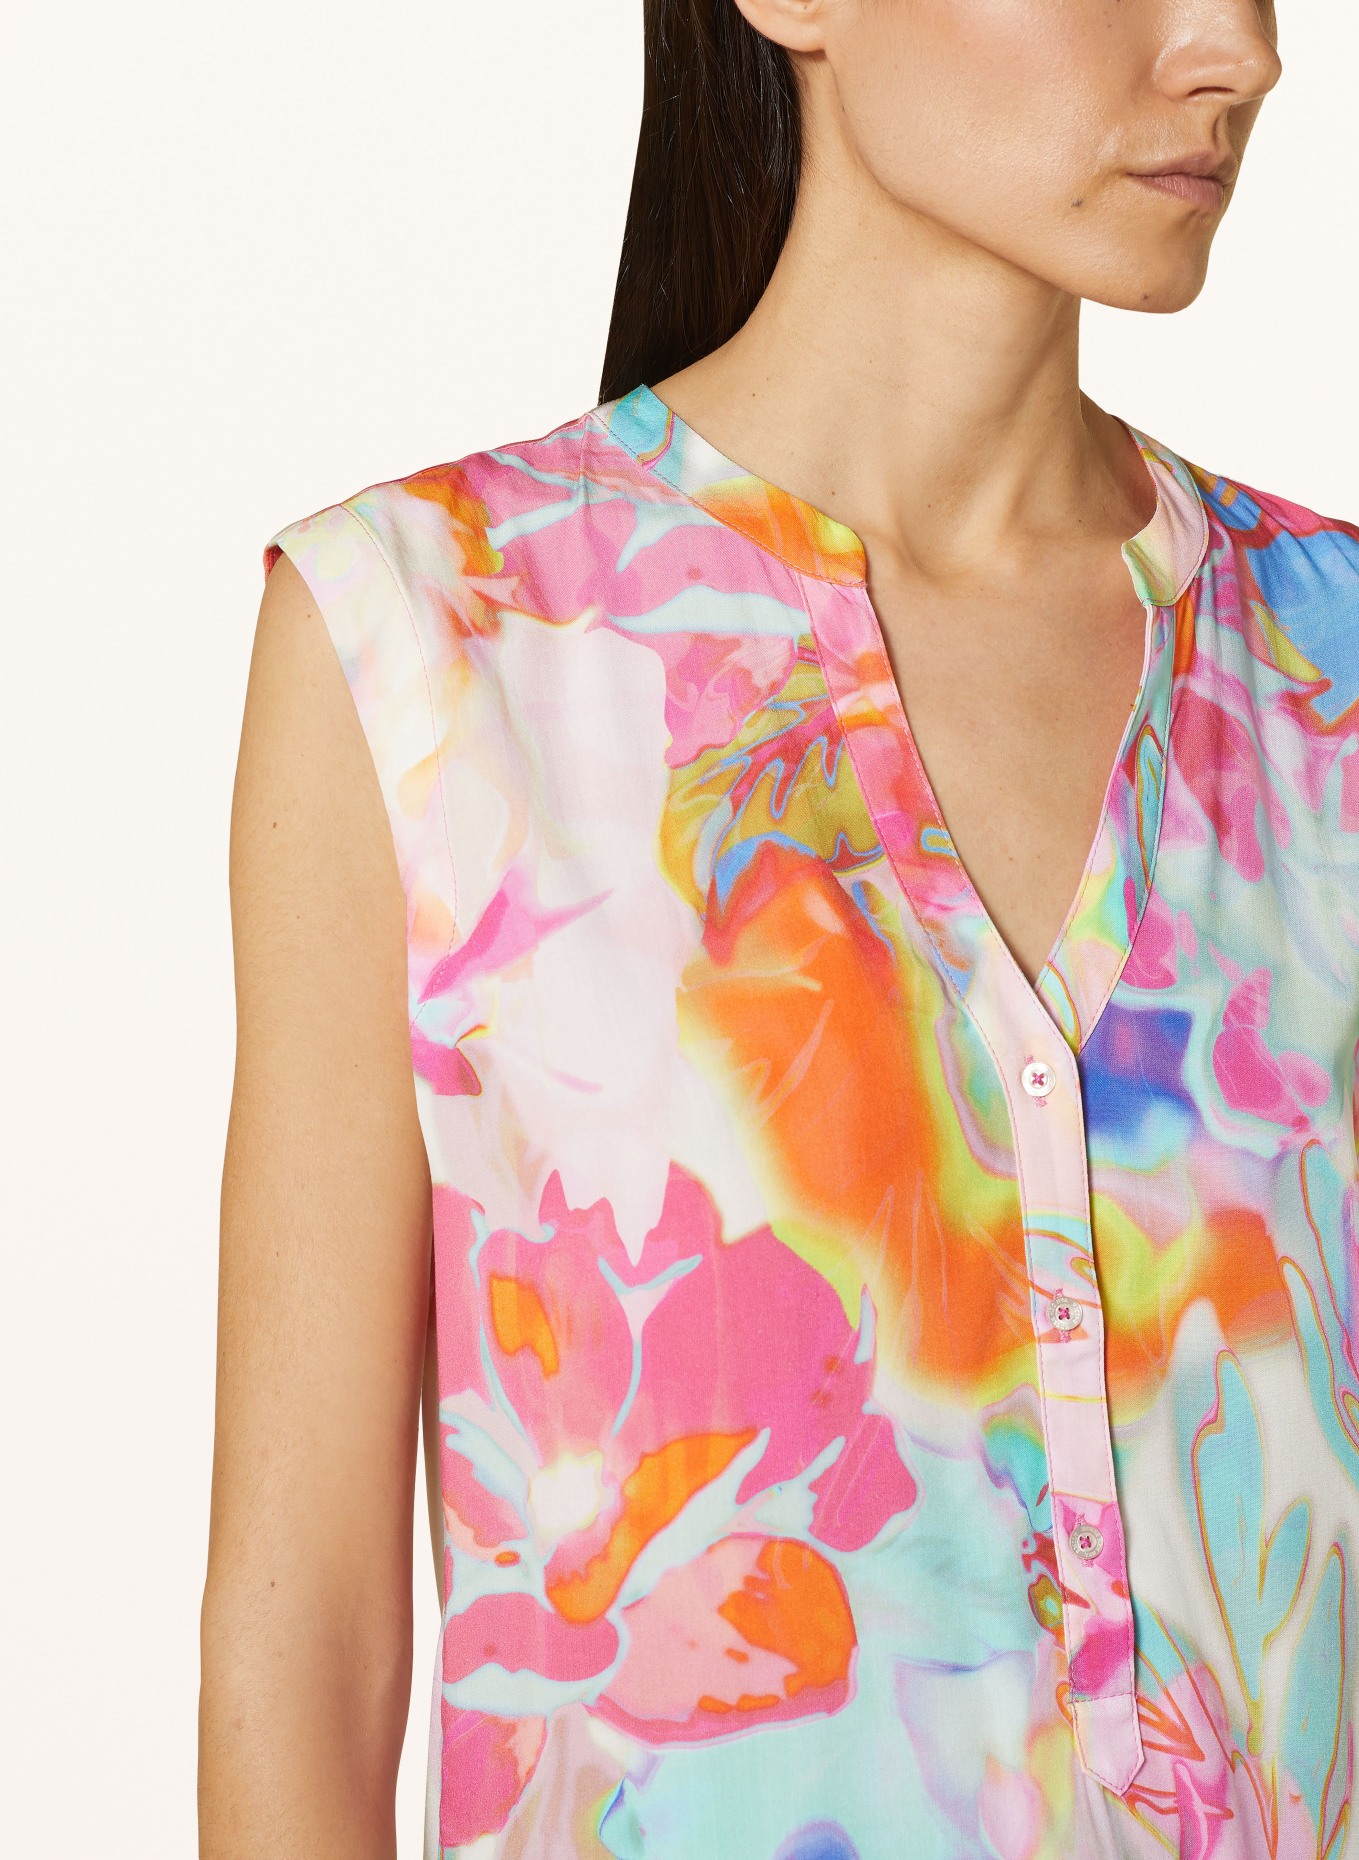 Emily VAN DEN BERGH Blouse top, Color: PINK/ ORANGE/ YELLOW (Image 4)